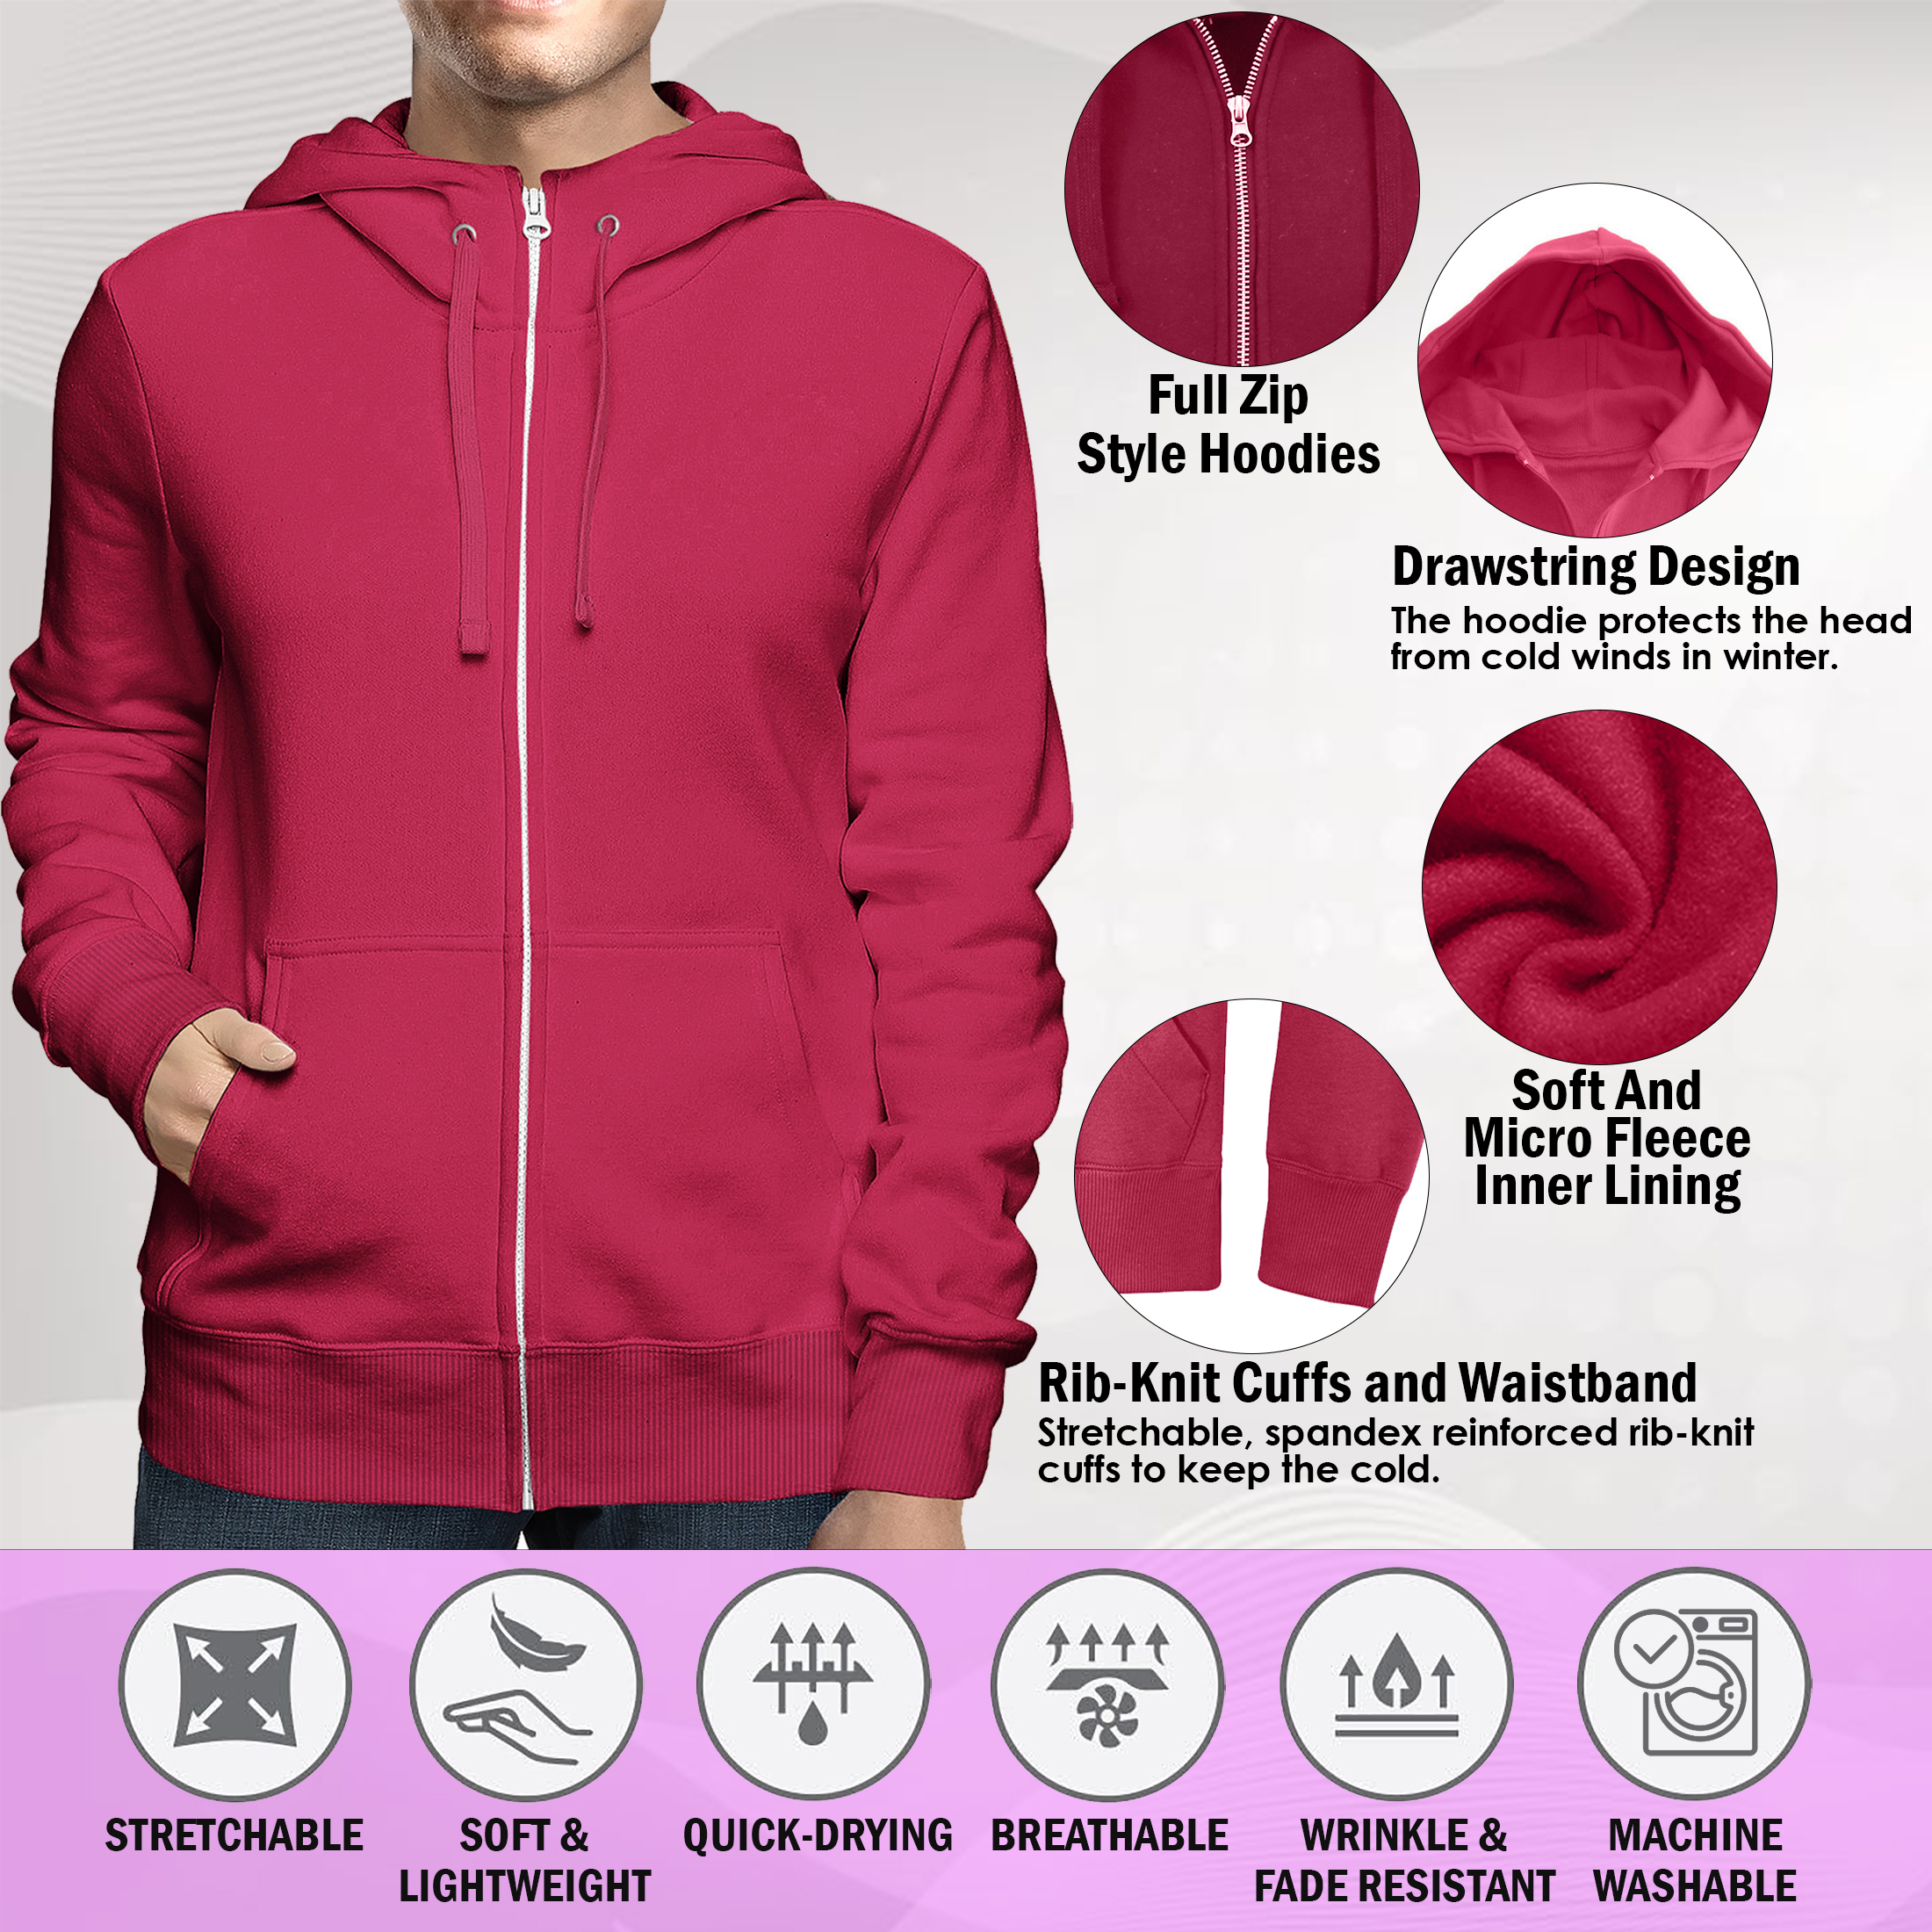 2-Pack: Men's Full Zip Up Fleece-Lined Hoodie Sweatshirt (Big & Tall Size Available) - Charcoal & Timberland, Medium